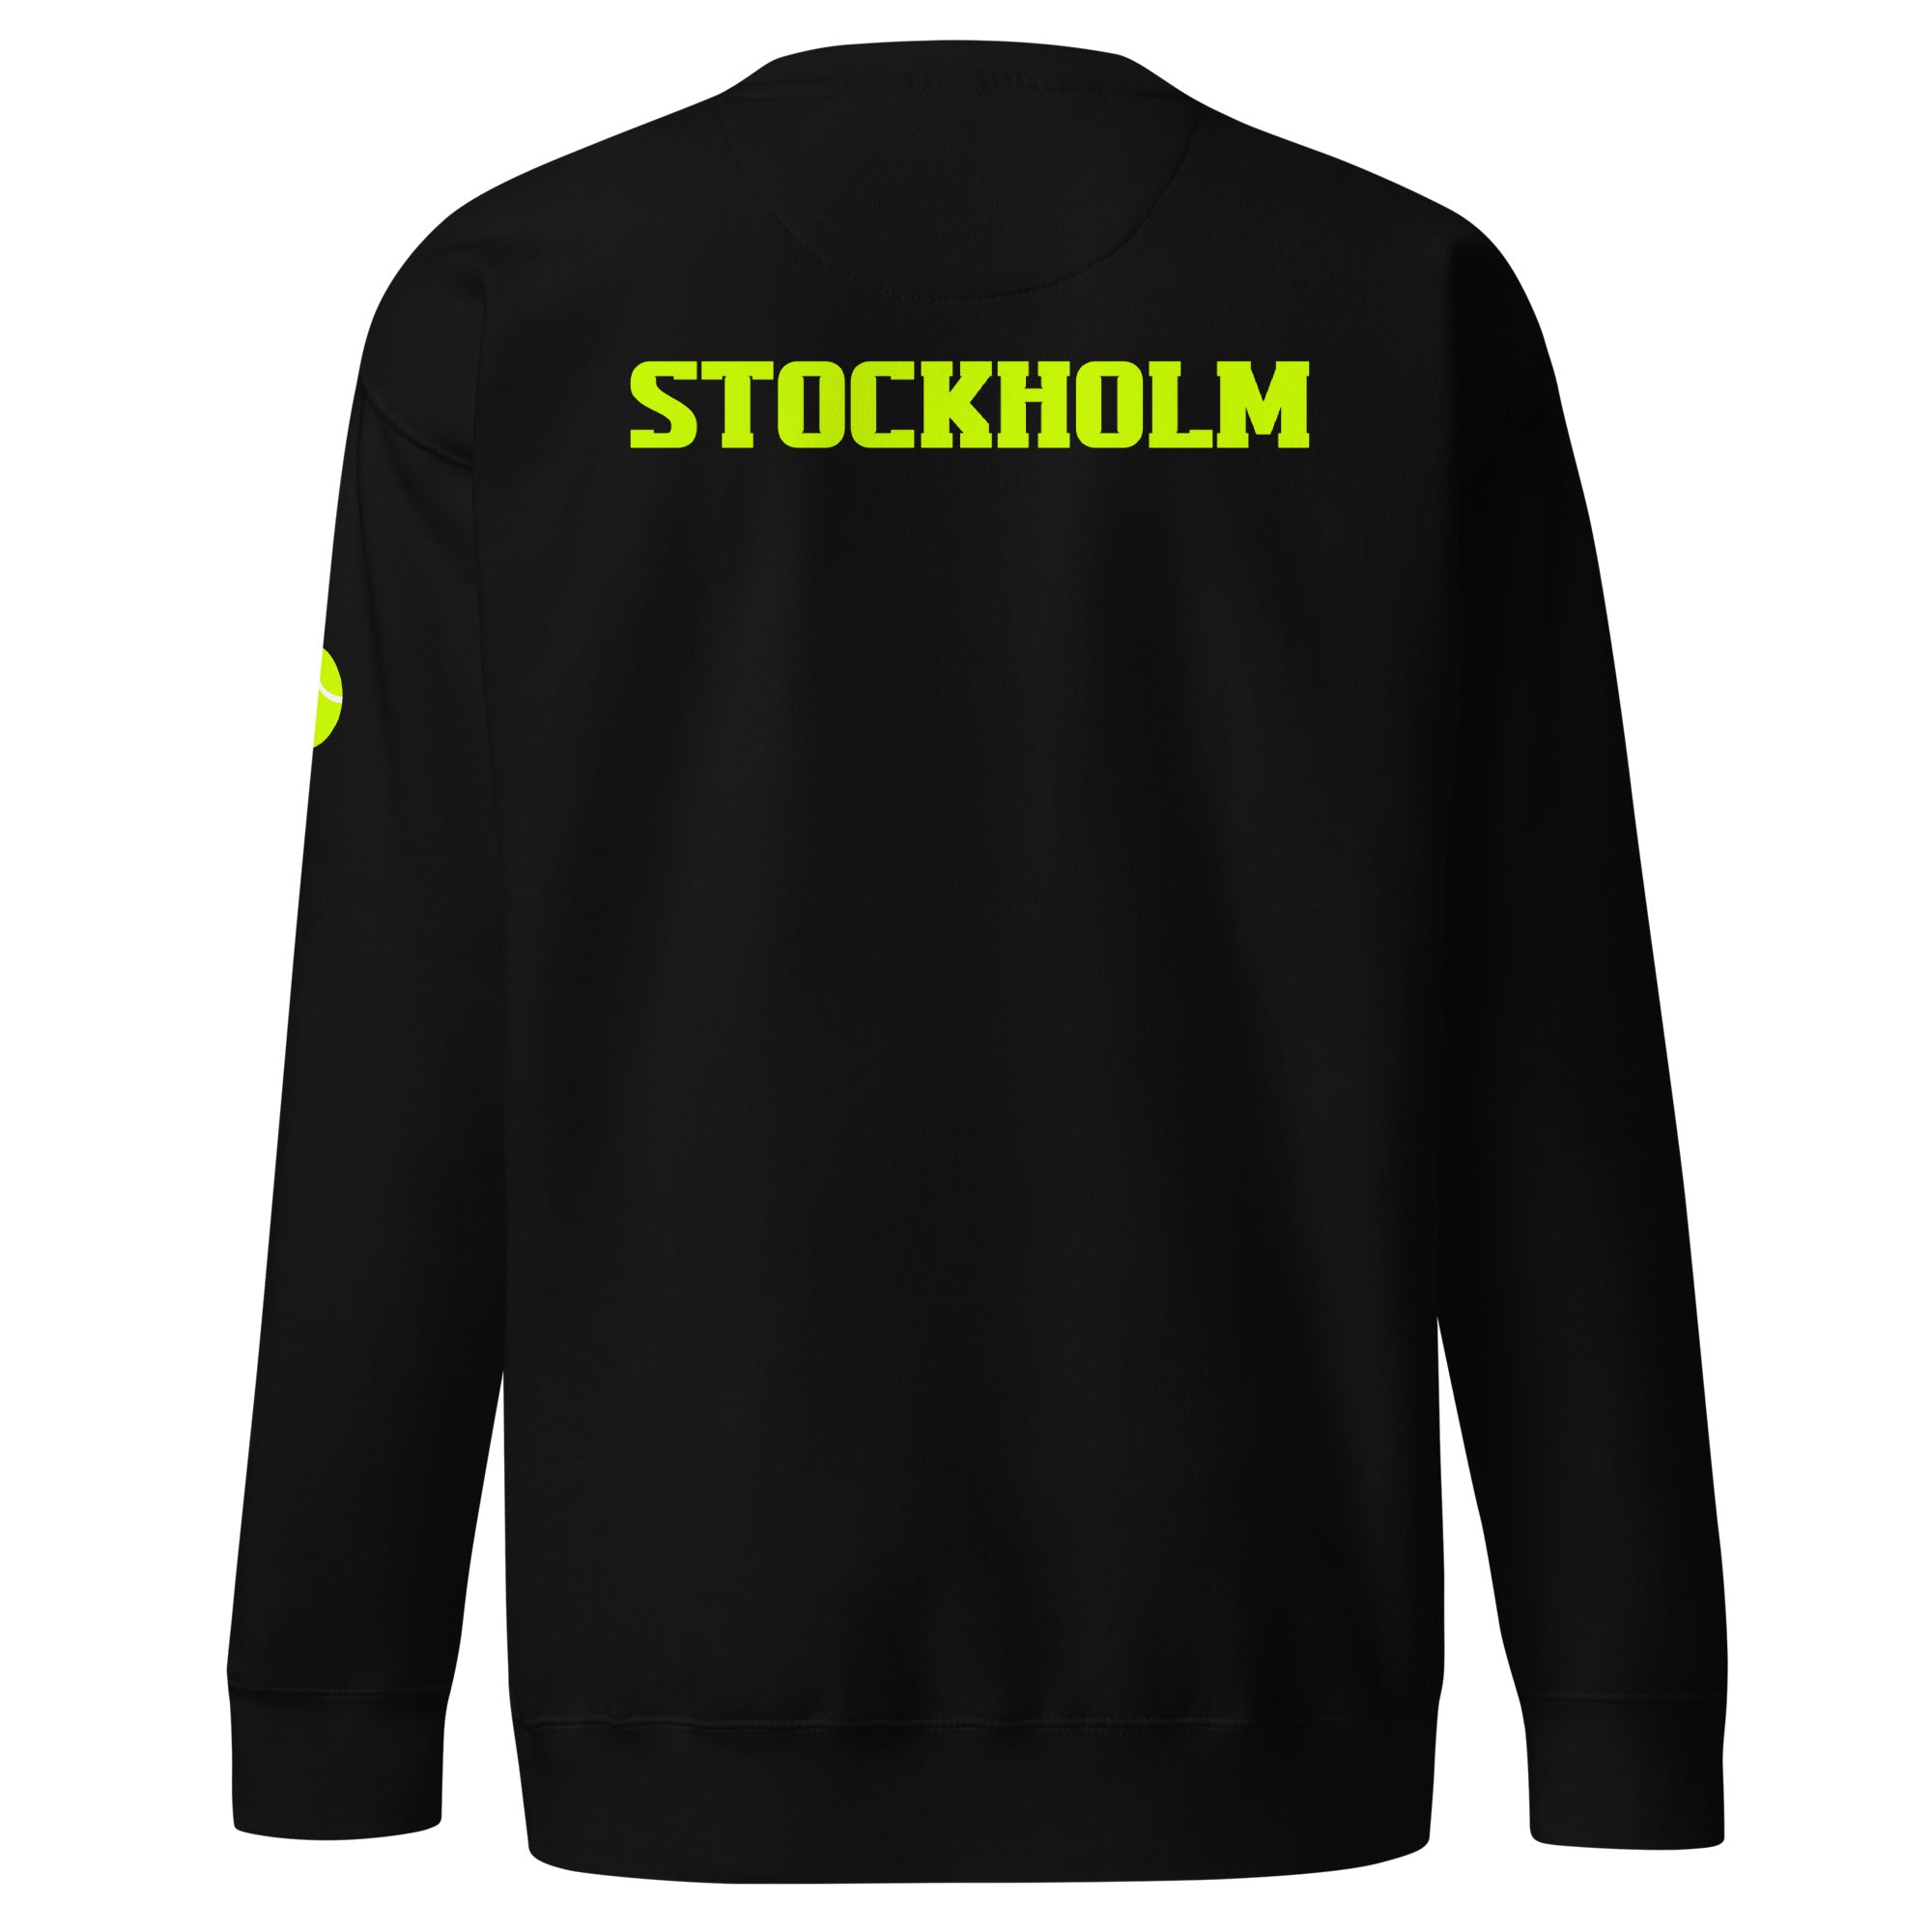 Unisex Premium Sweatshirt - Tennis Masters Stockholm - GRAPHIC T-SHIRTS